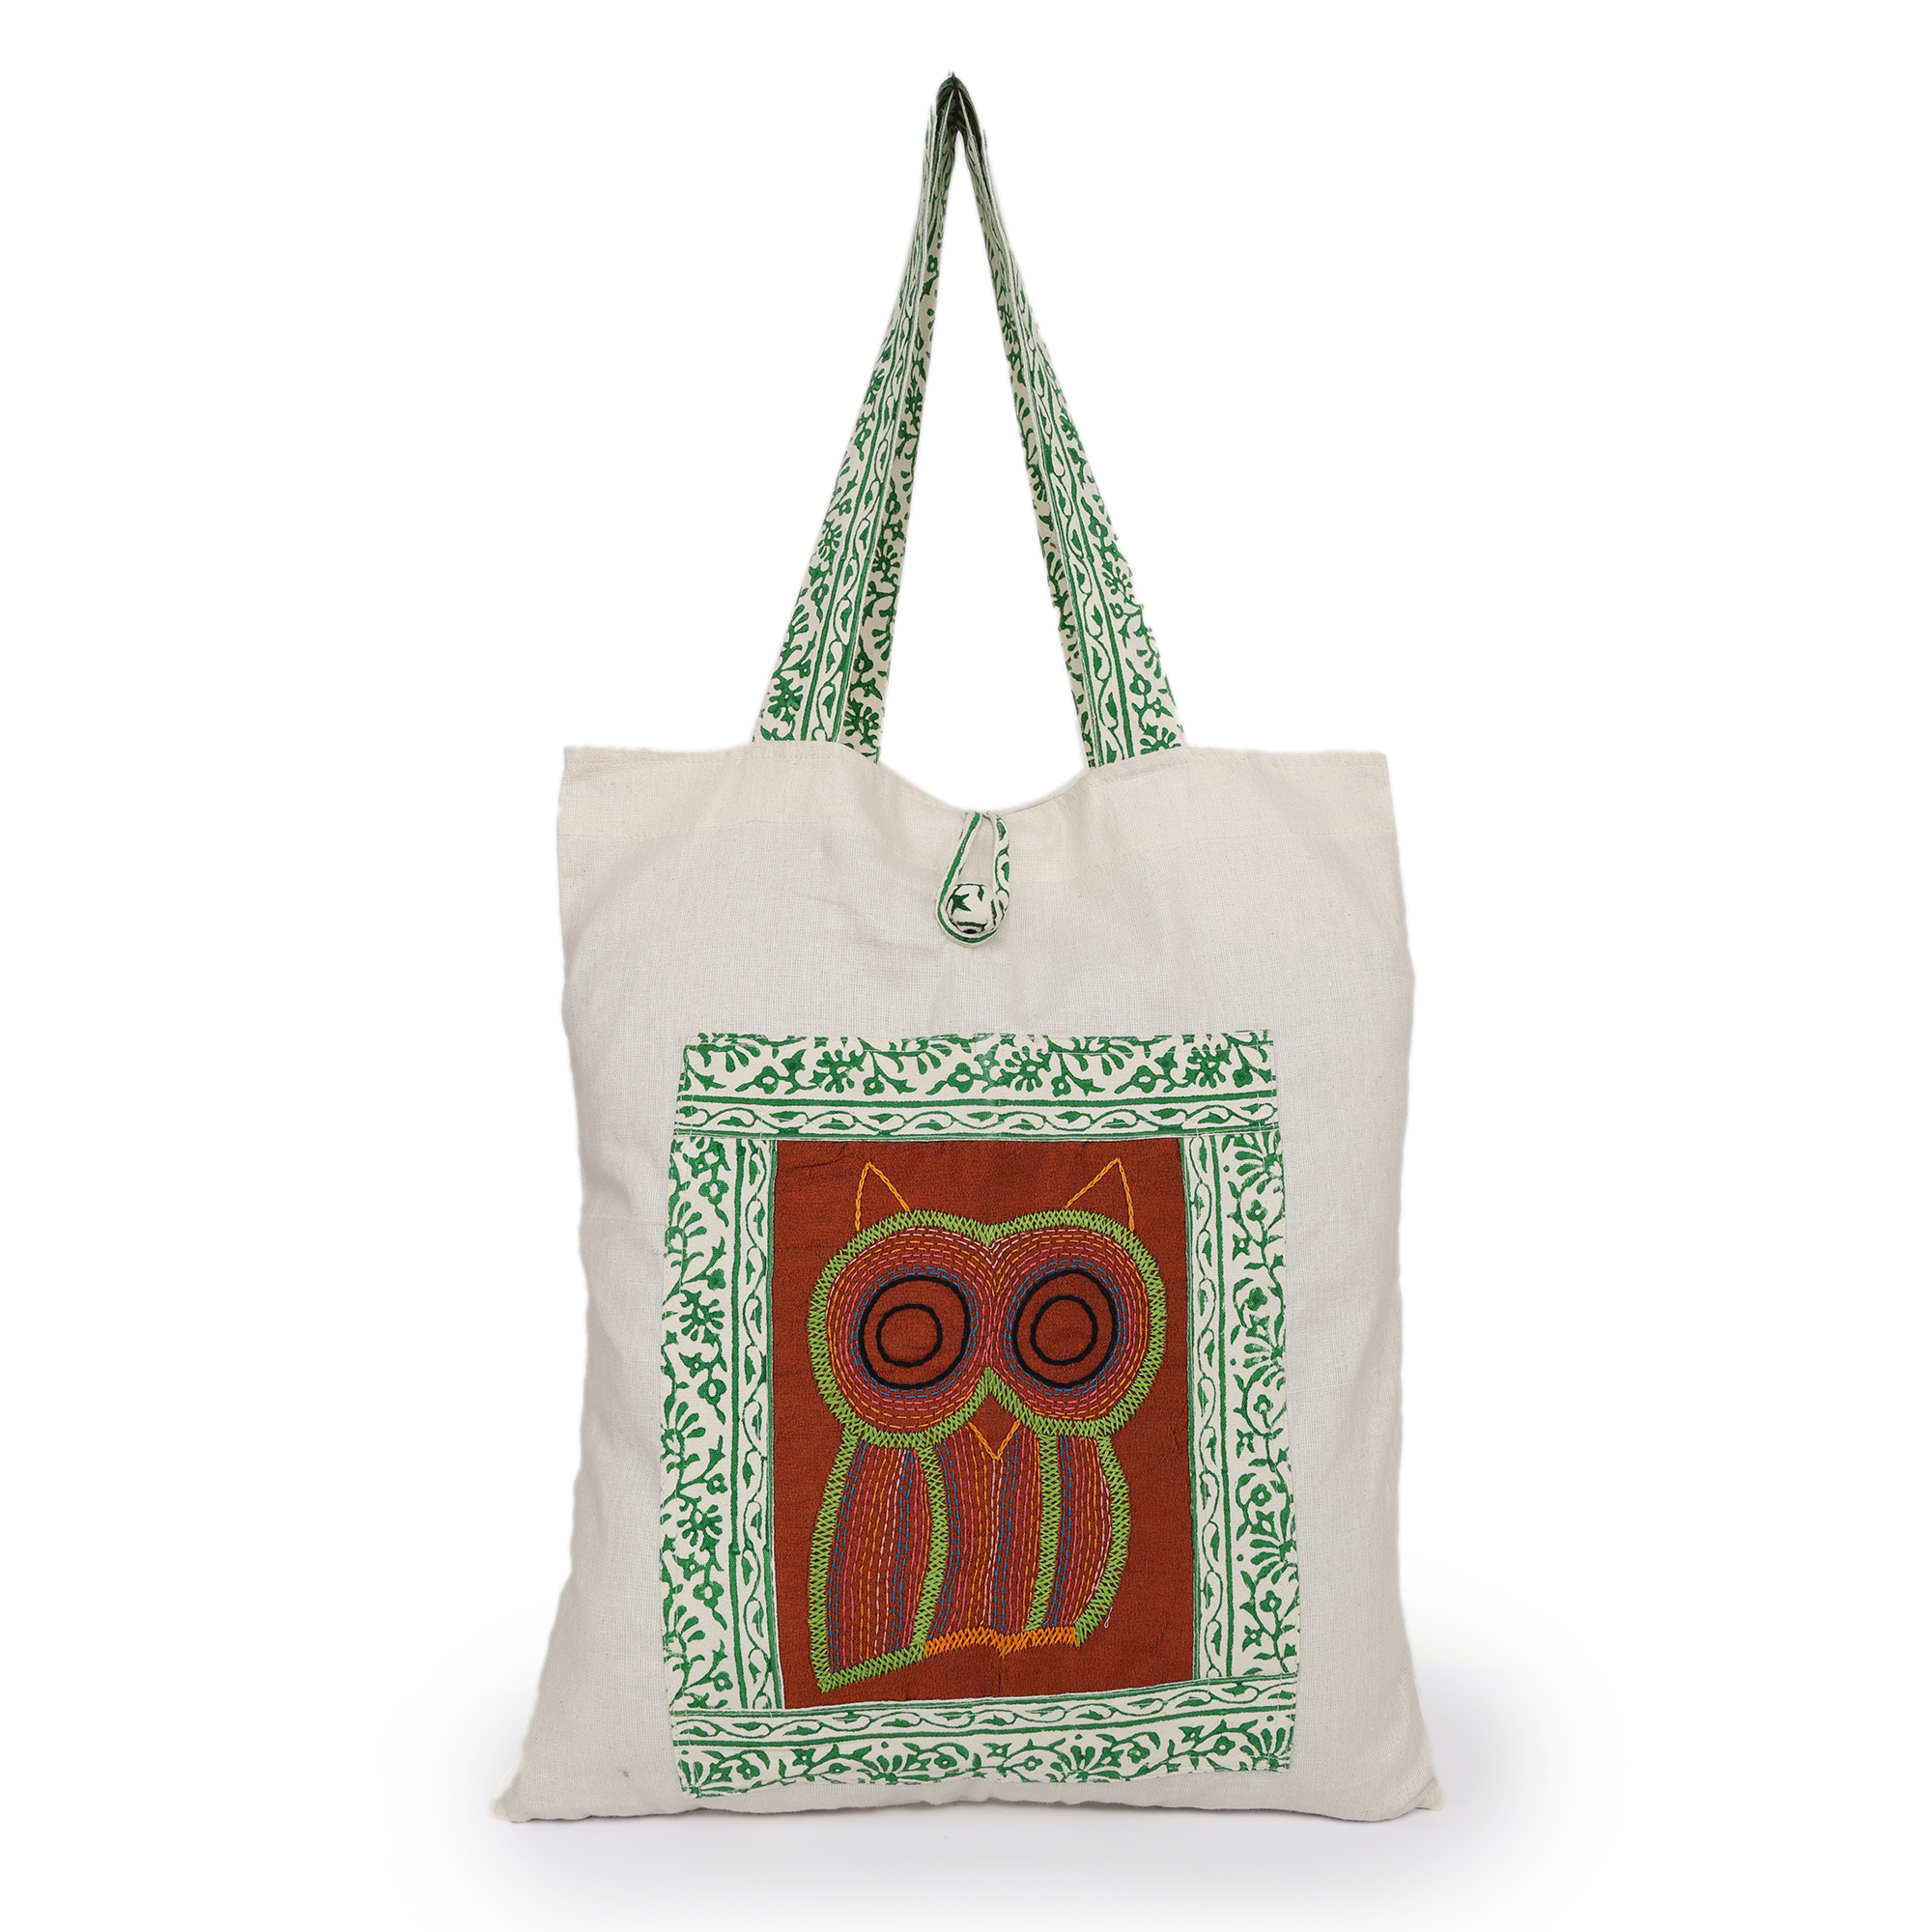 bag design drawing | Exclusive Deals and Offers | sreesundareswara.com